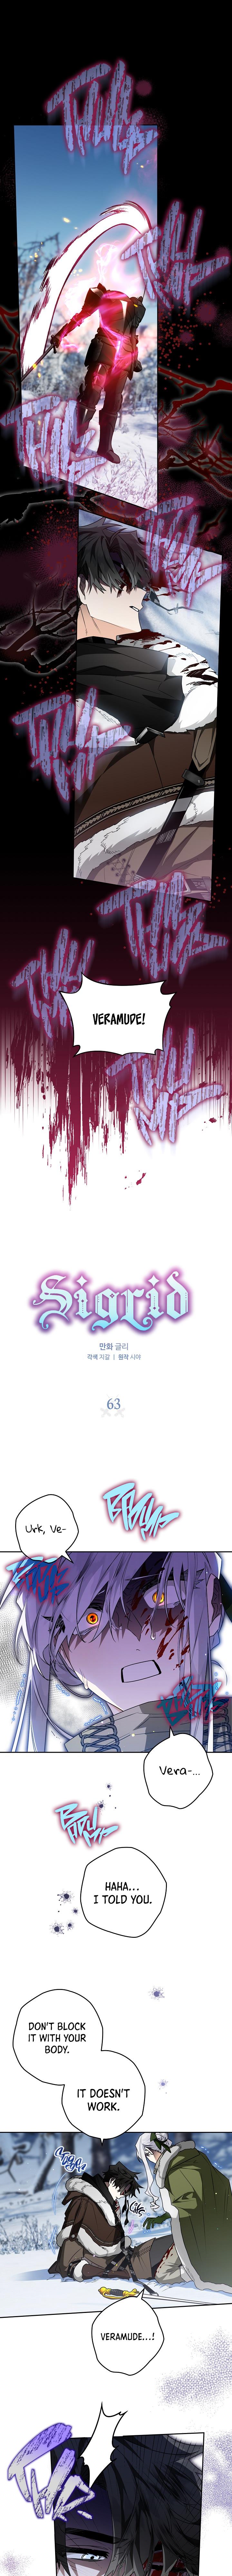 Sigrid - Page 1